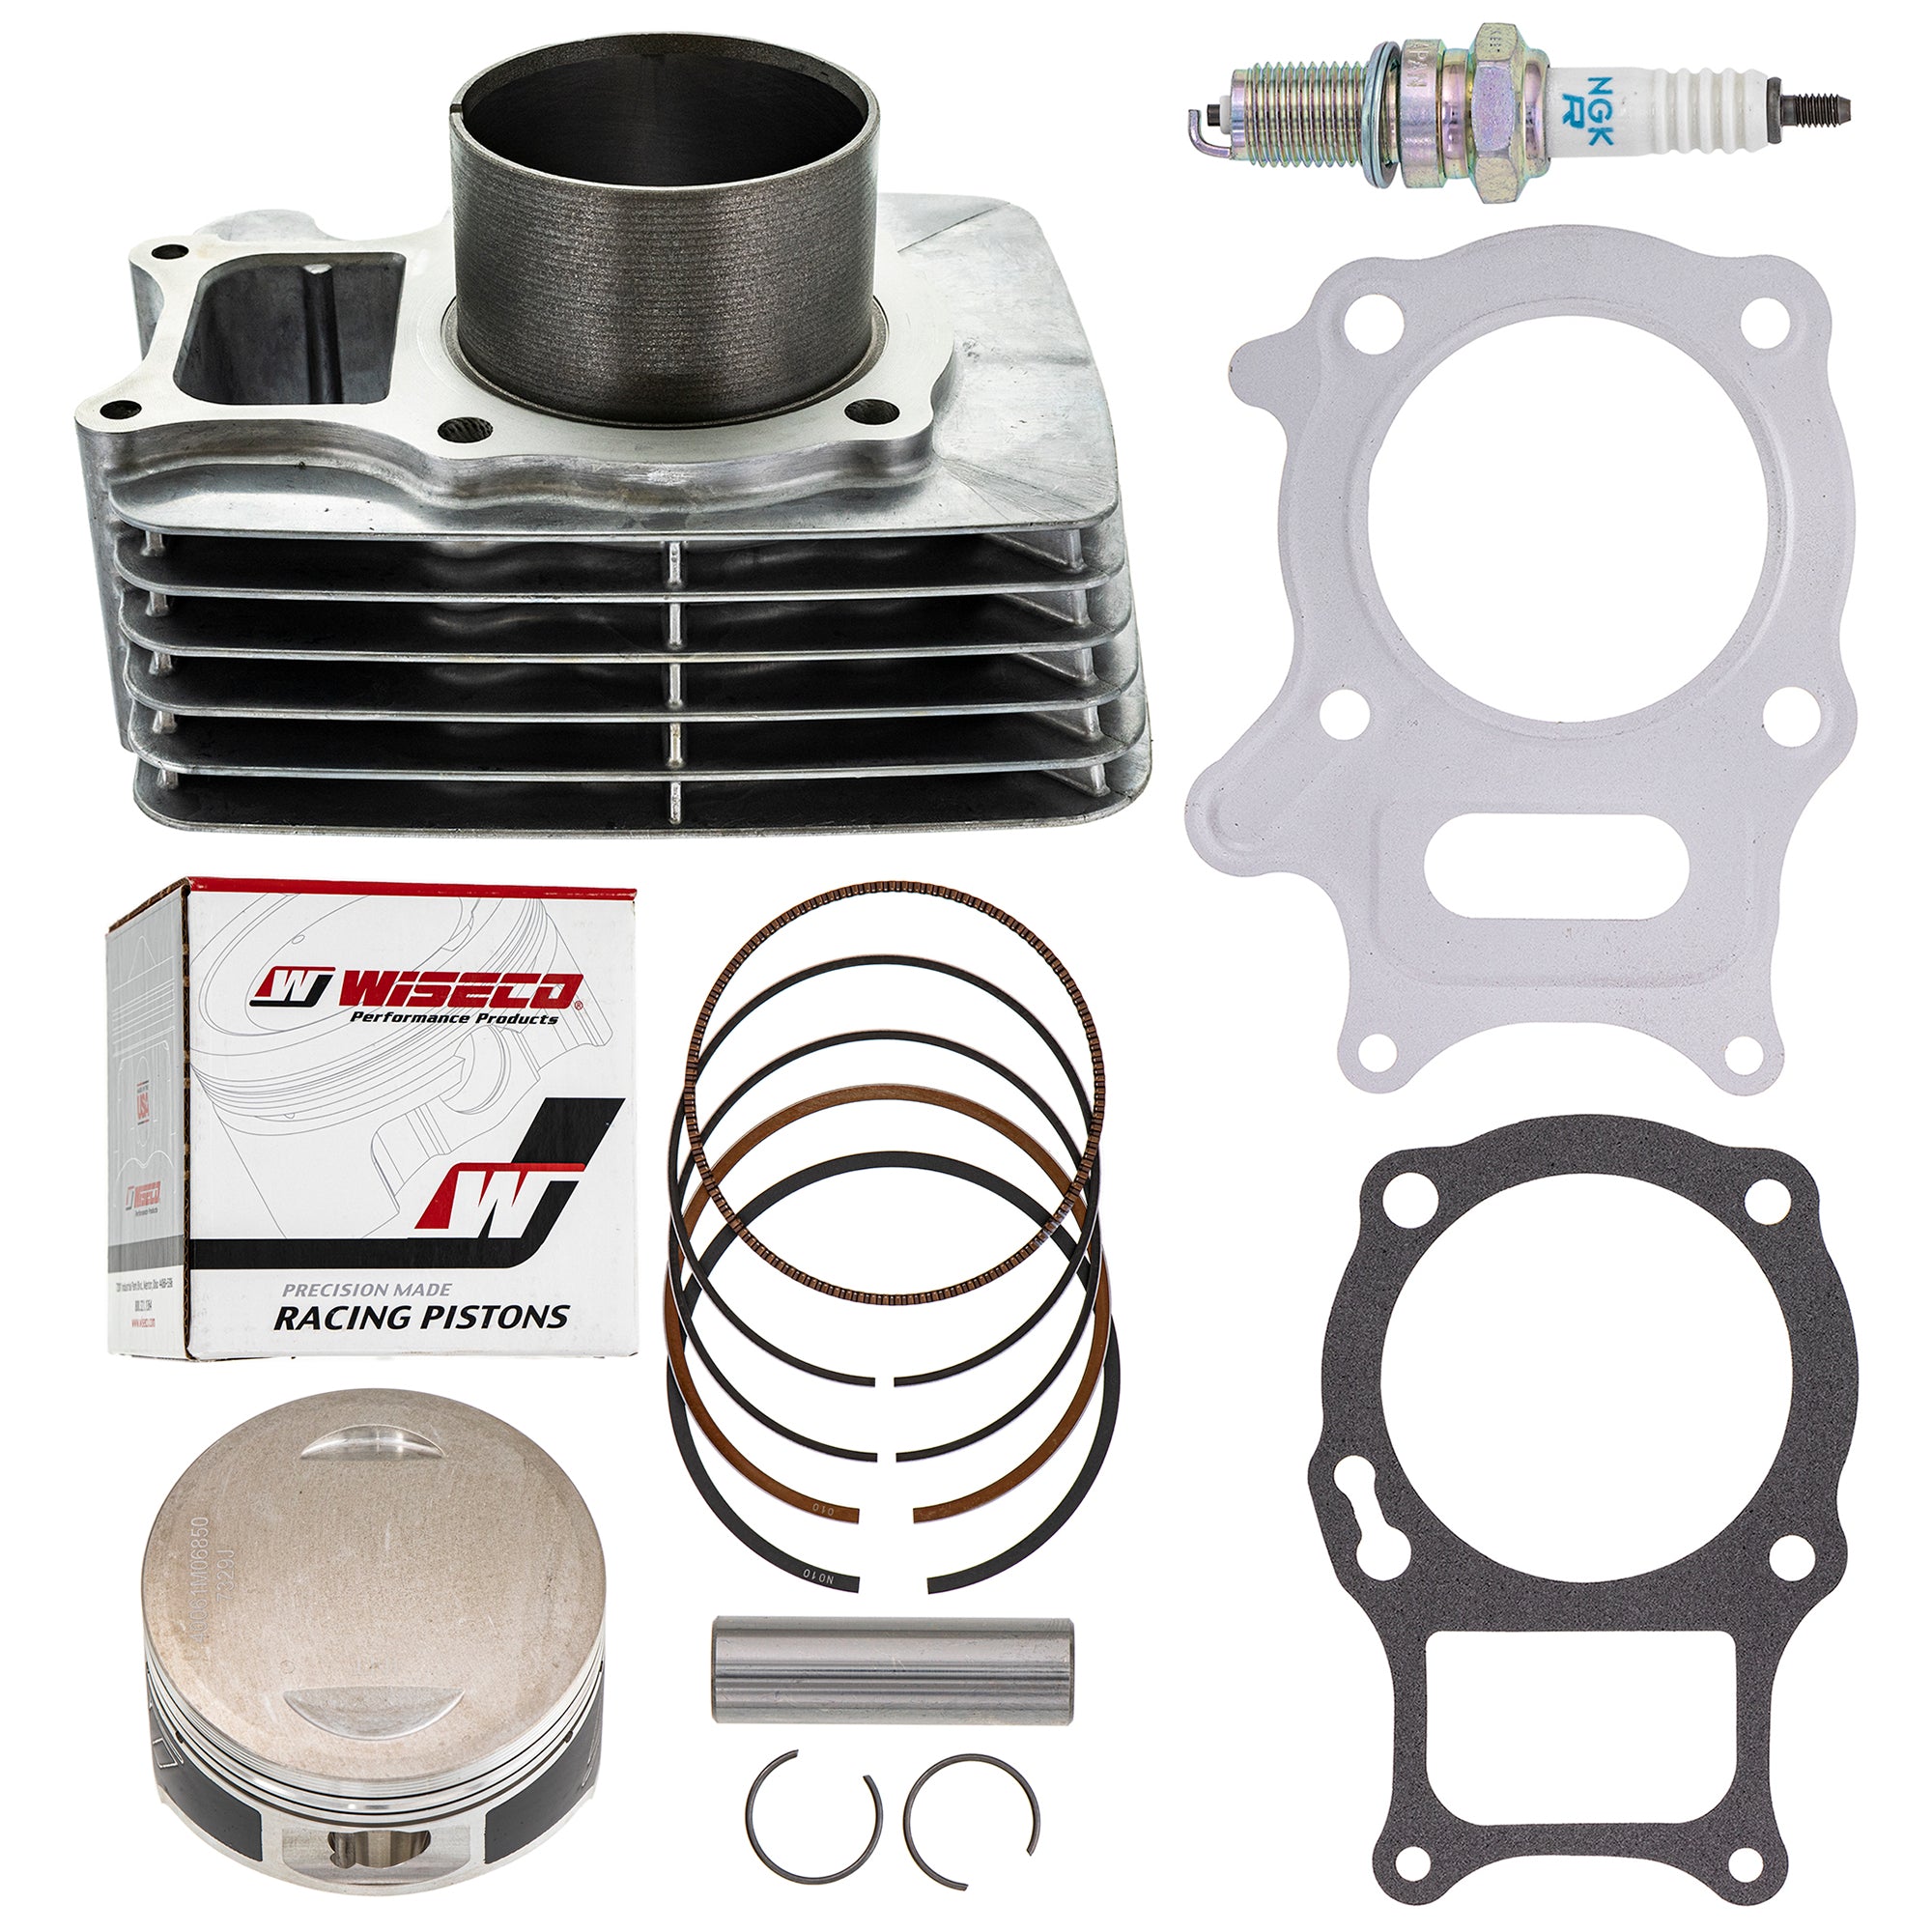 Cylinder Wiseco Piston Gasket Kit for zOTHER Honda TRX250 SporTrax Recon 13111-HB5-000 NICHE MK1003456